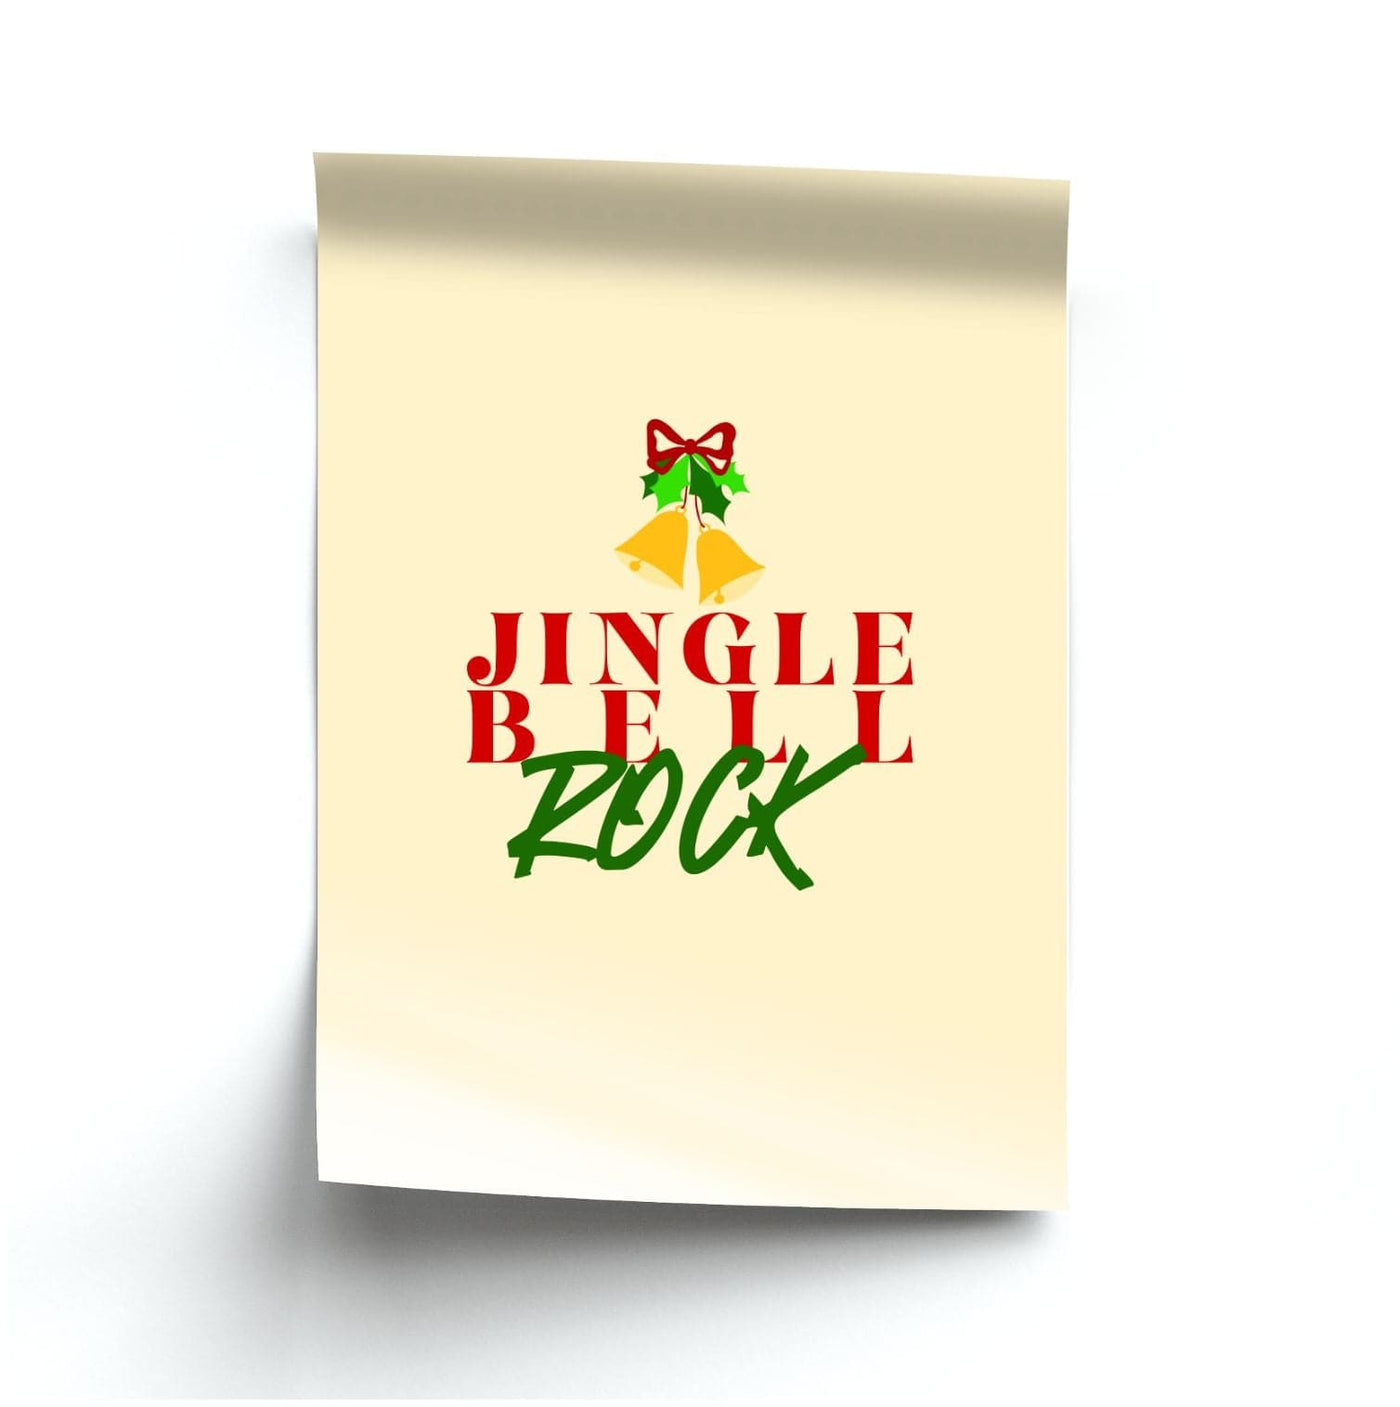 Jingle Bell Rock - Christmas Songs Poster